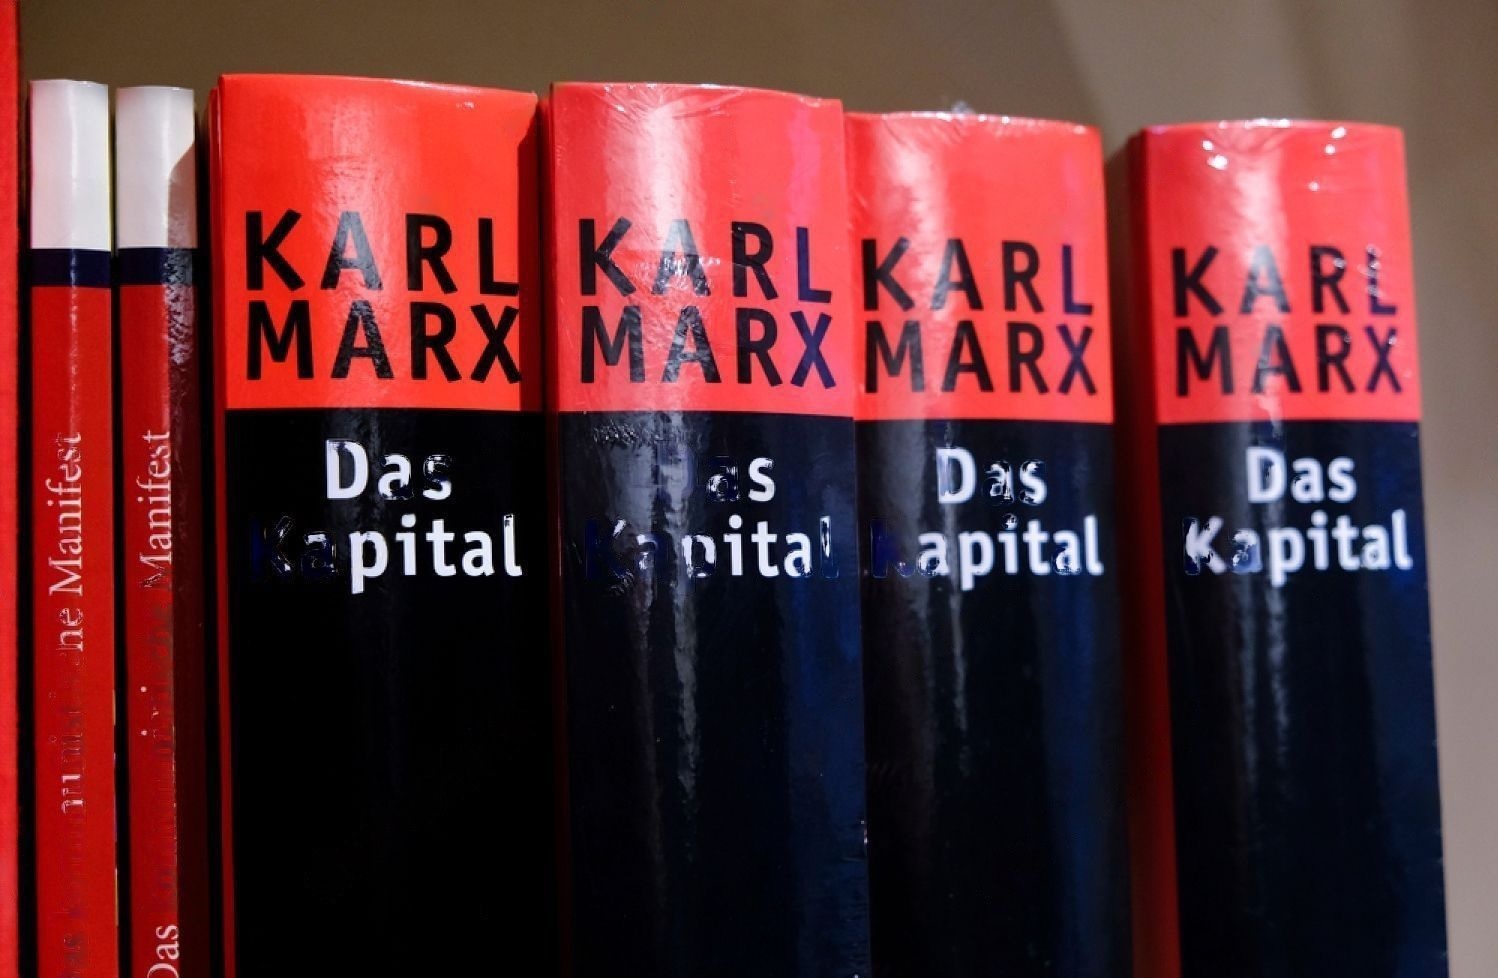  What book did Karl Marx write?